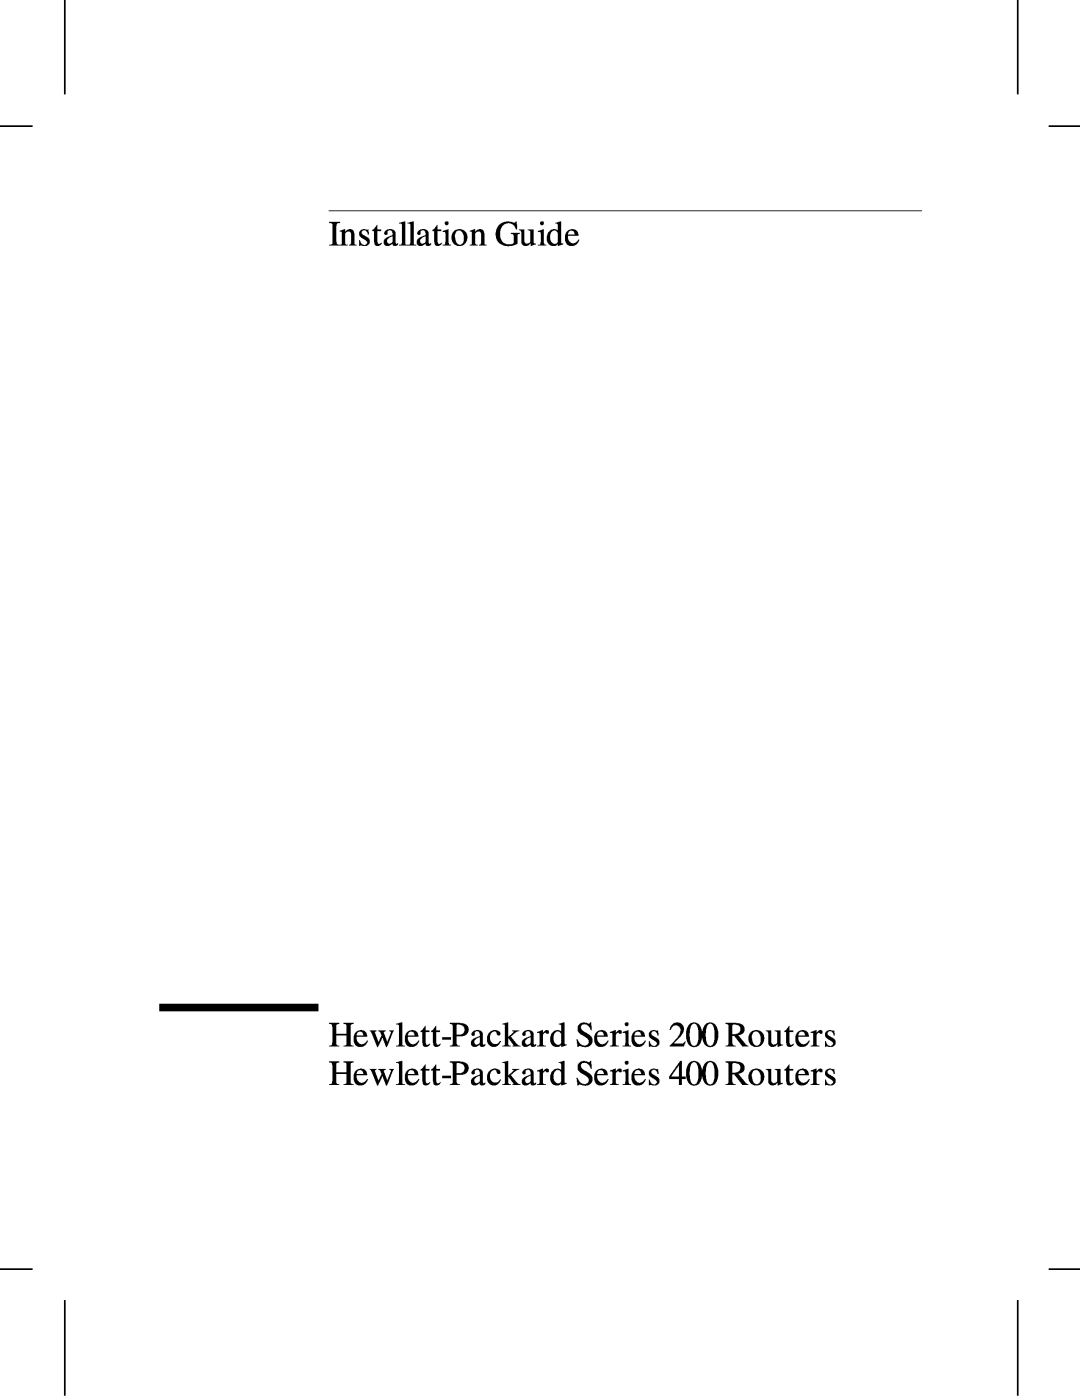 HP 480 manual Installation Guide, Hewlett-Packard Series 200 Routers Hewlett-Packard Series 400 Routers 